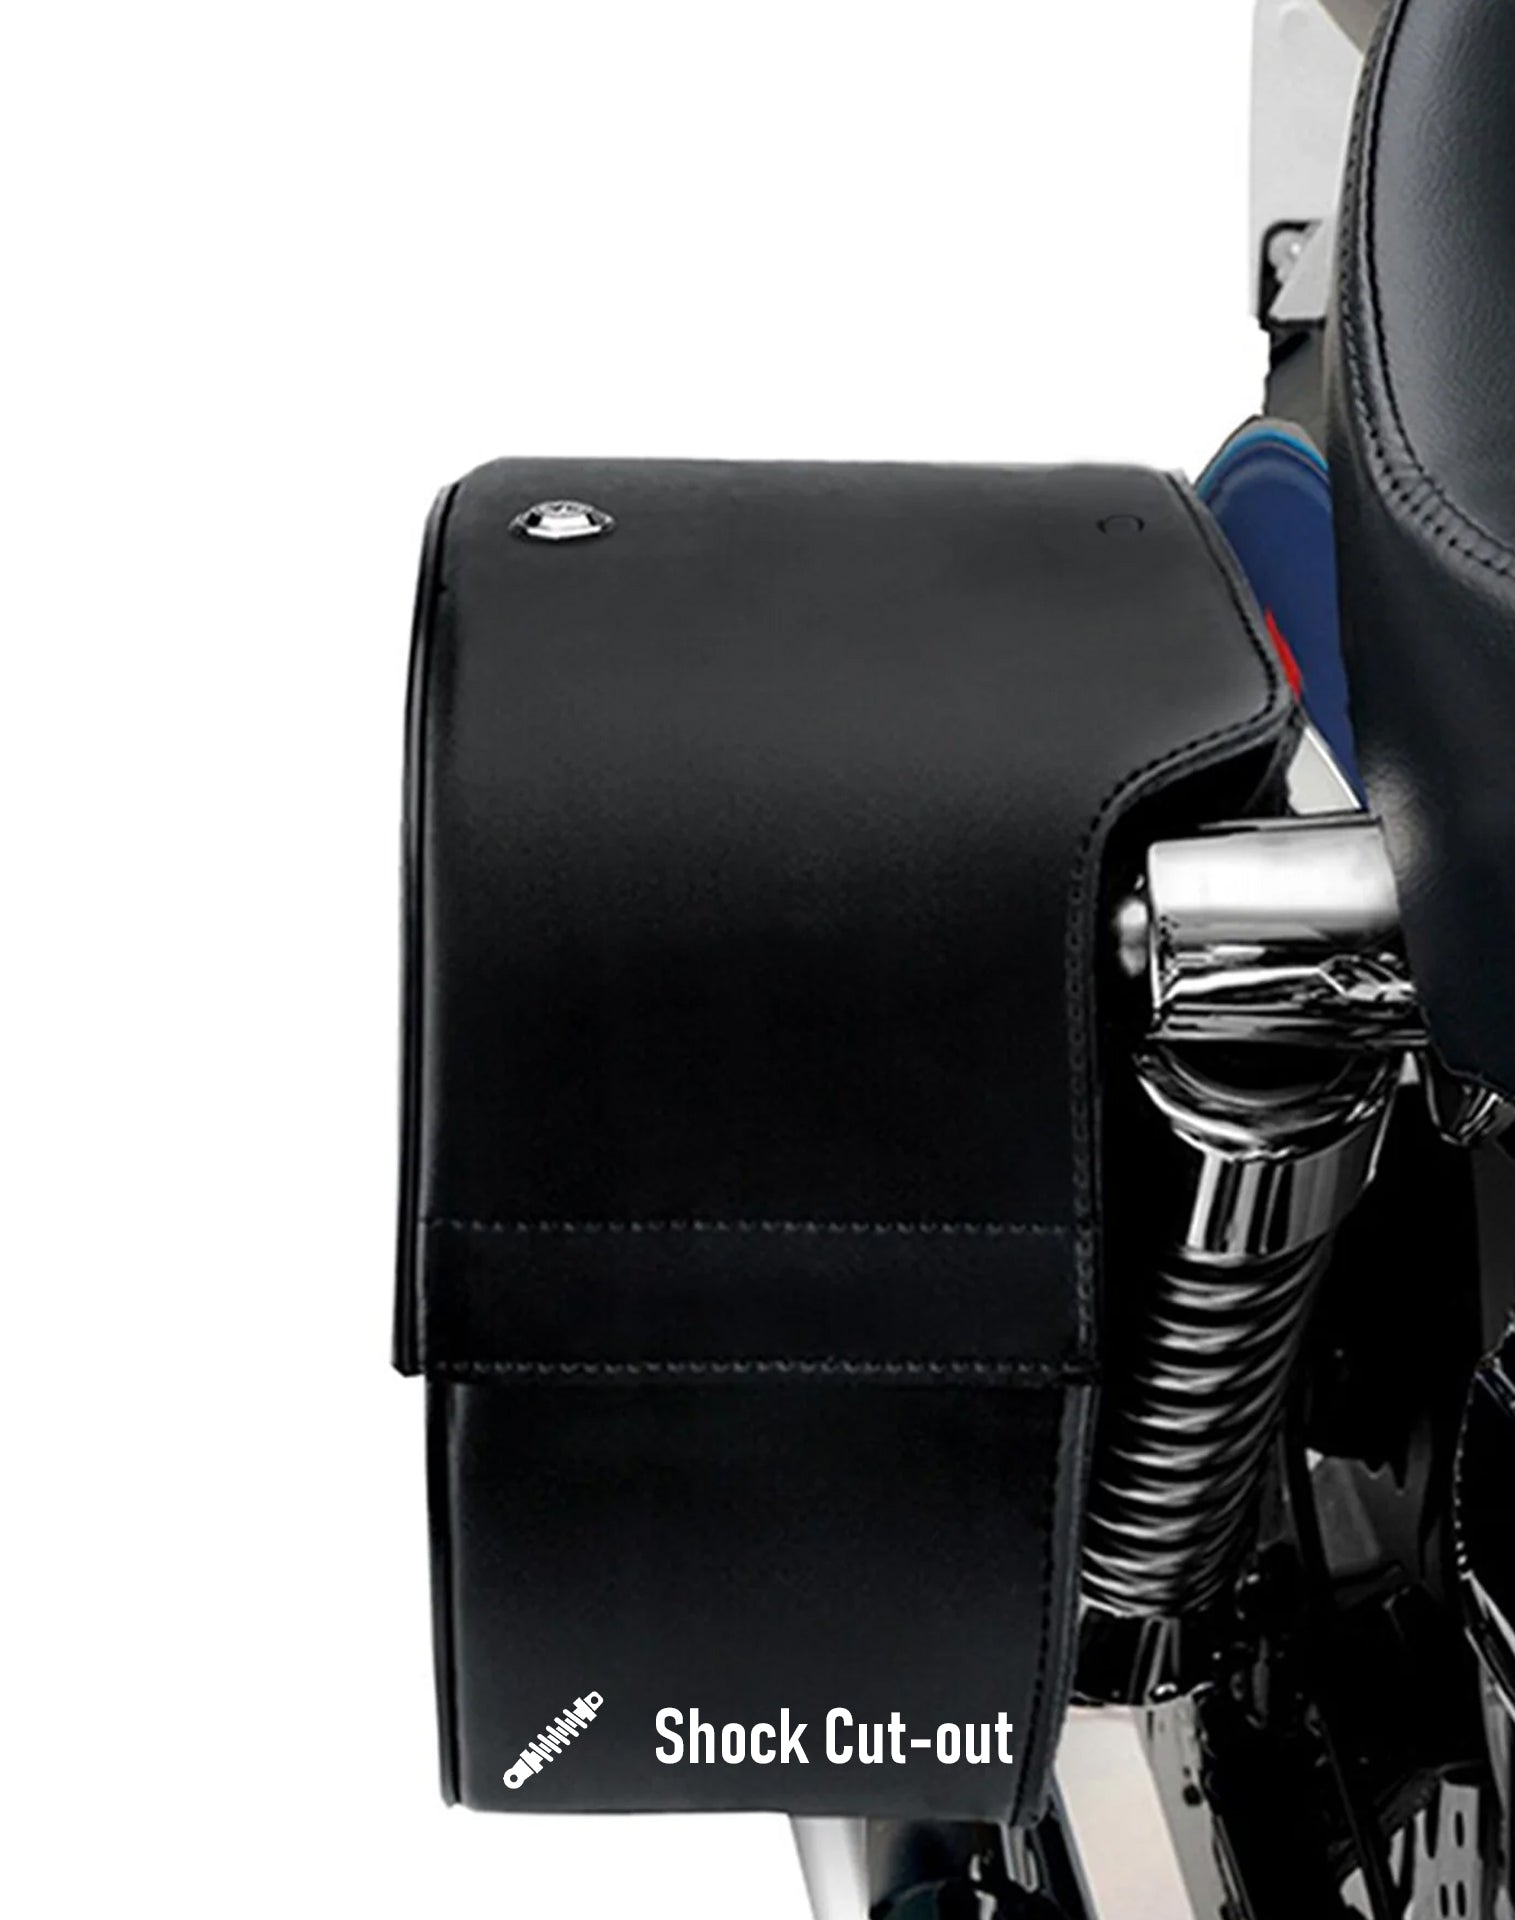 Viking Skarner Large Shock Cut Out Leather Motorcycle Saddlebags For Harley Sportster 1200 Nightster Xl1200N Hard Shell Construction